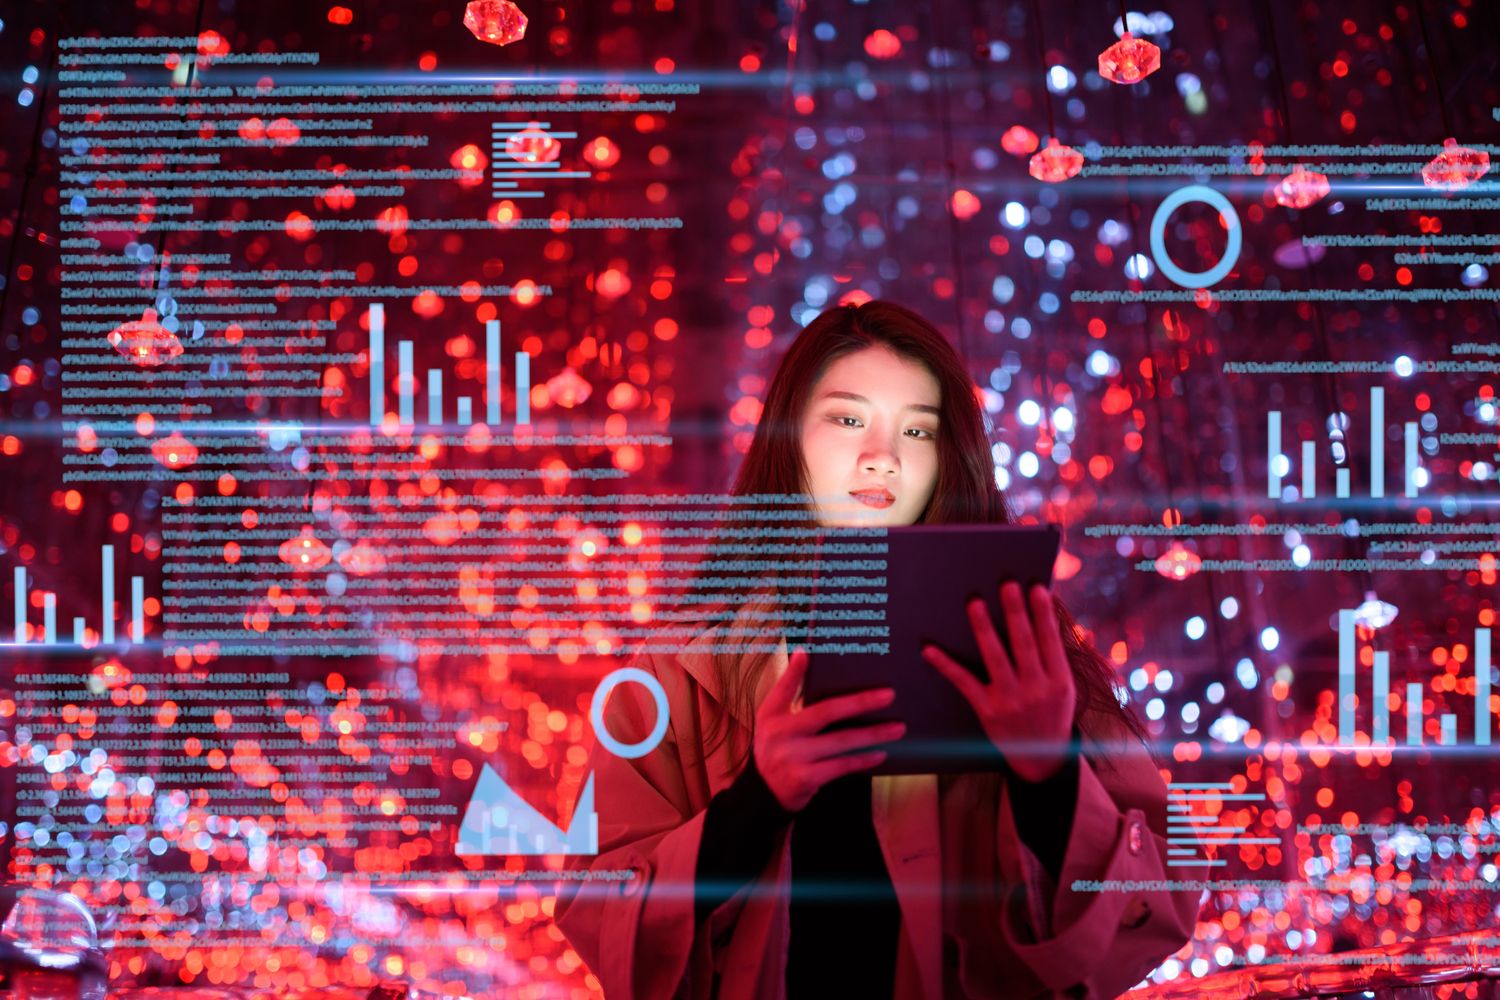 young woman uses digital tablet on virtual visual screen at night